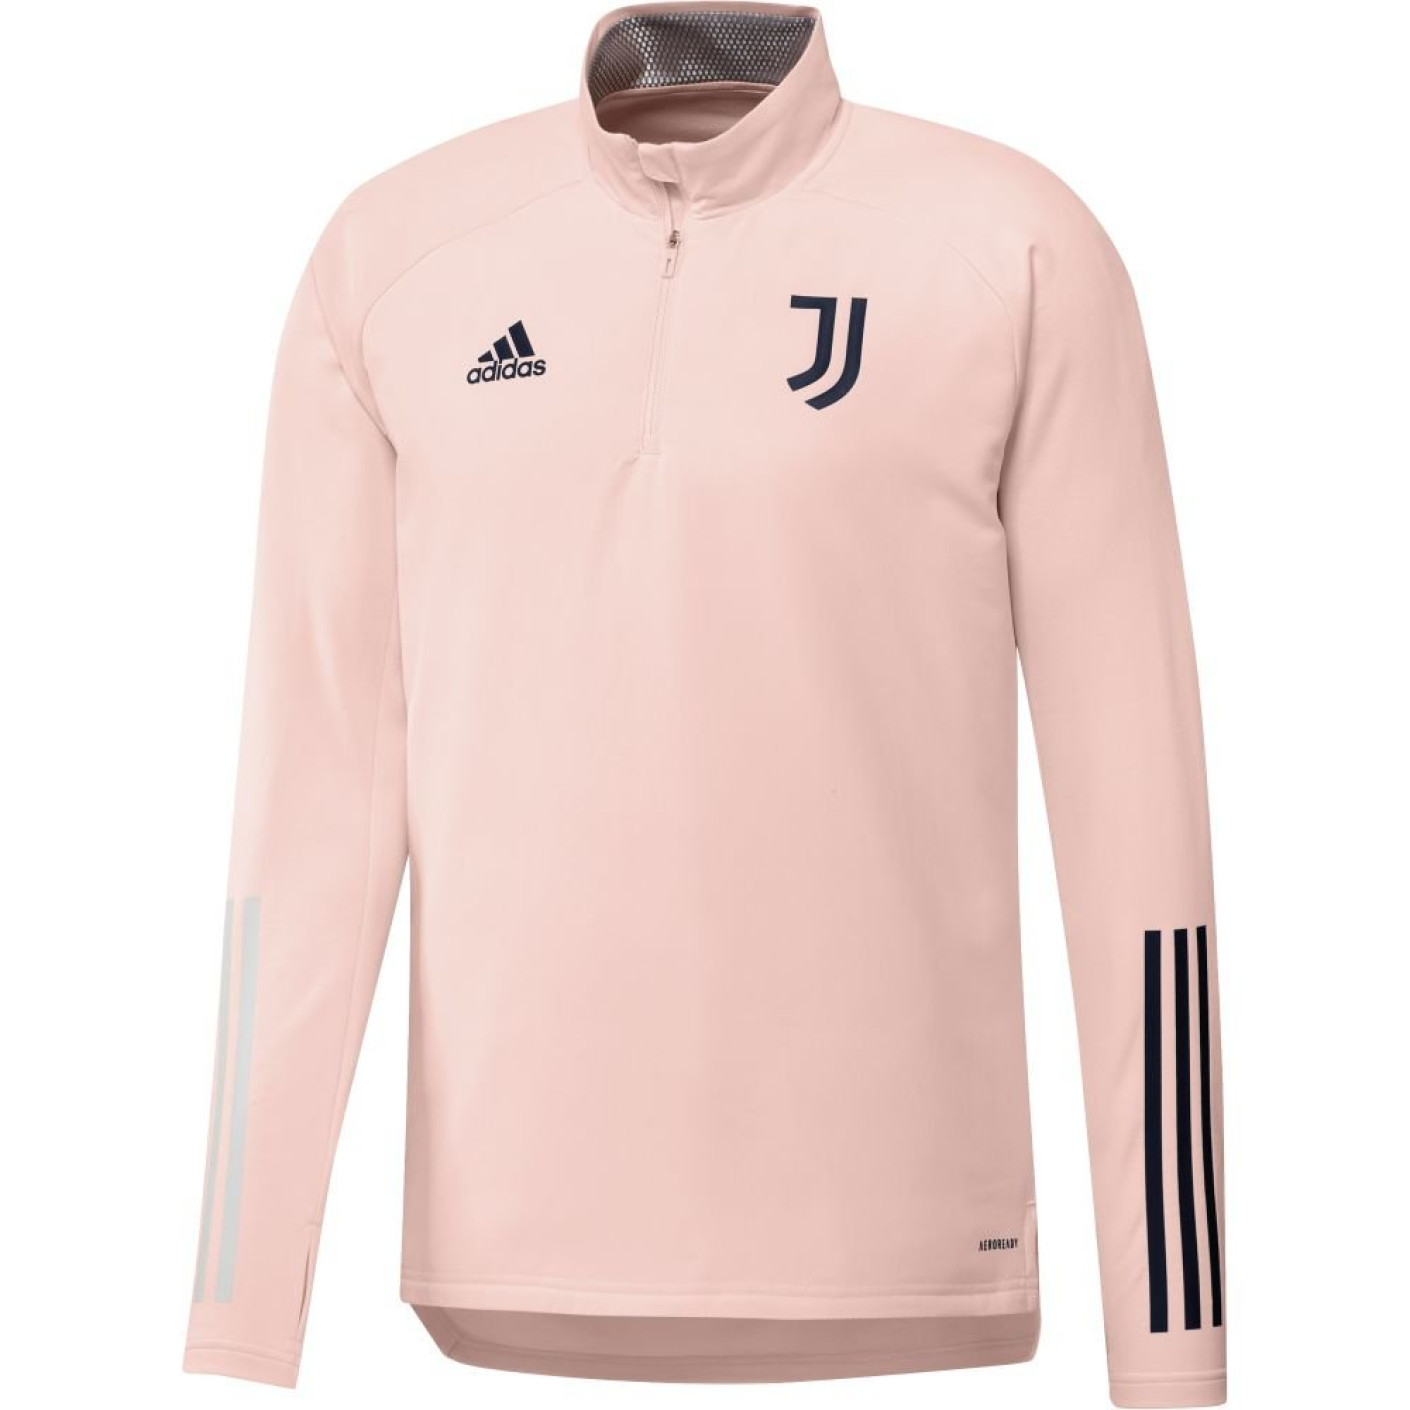 adidas Juventus Trainingstrui Climawarm 2020-2021 Roze Zwart